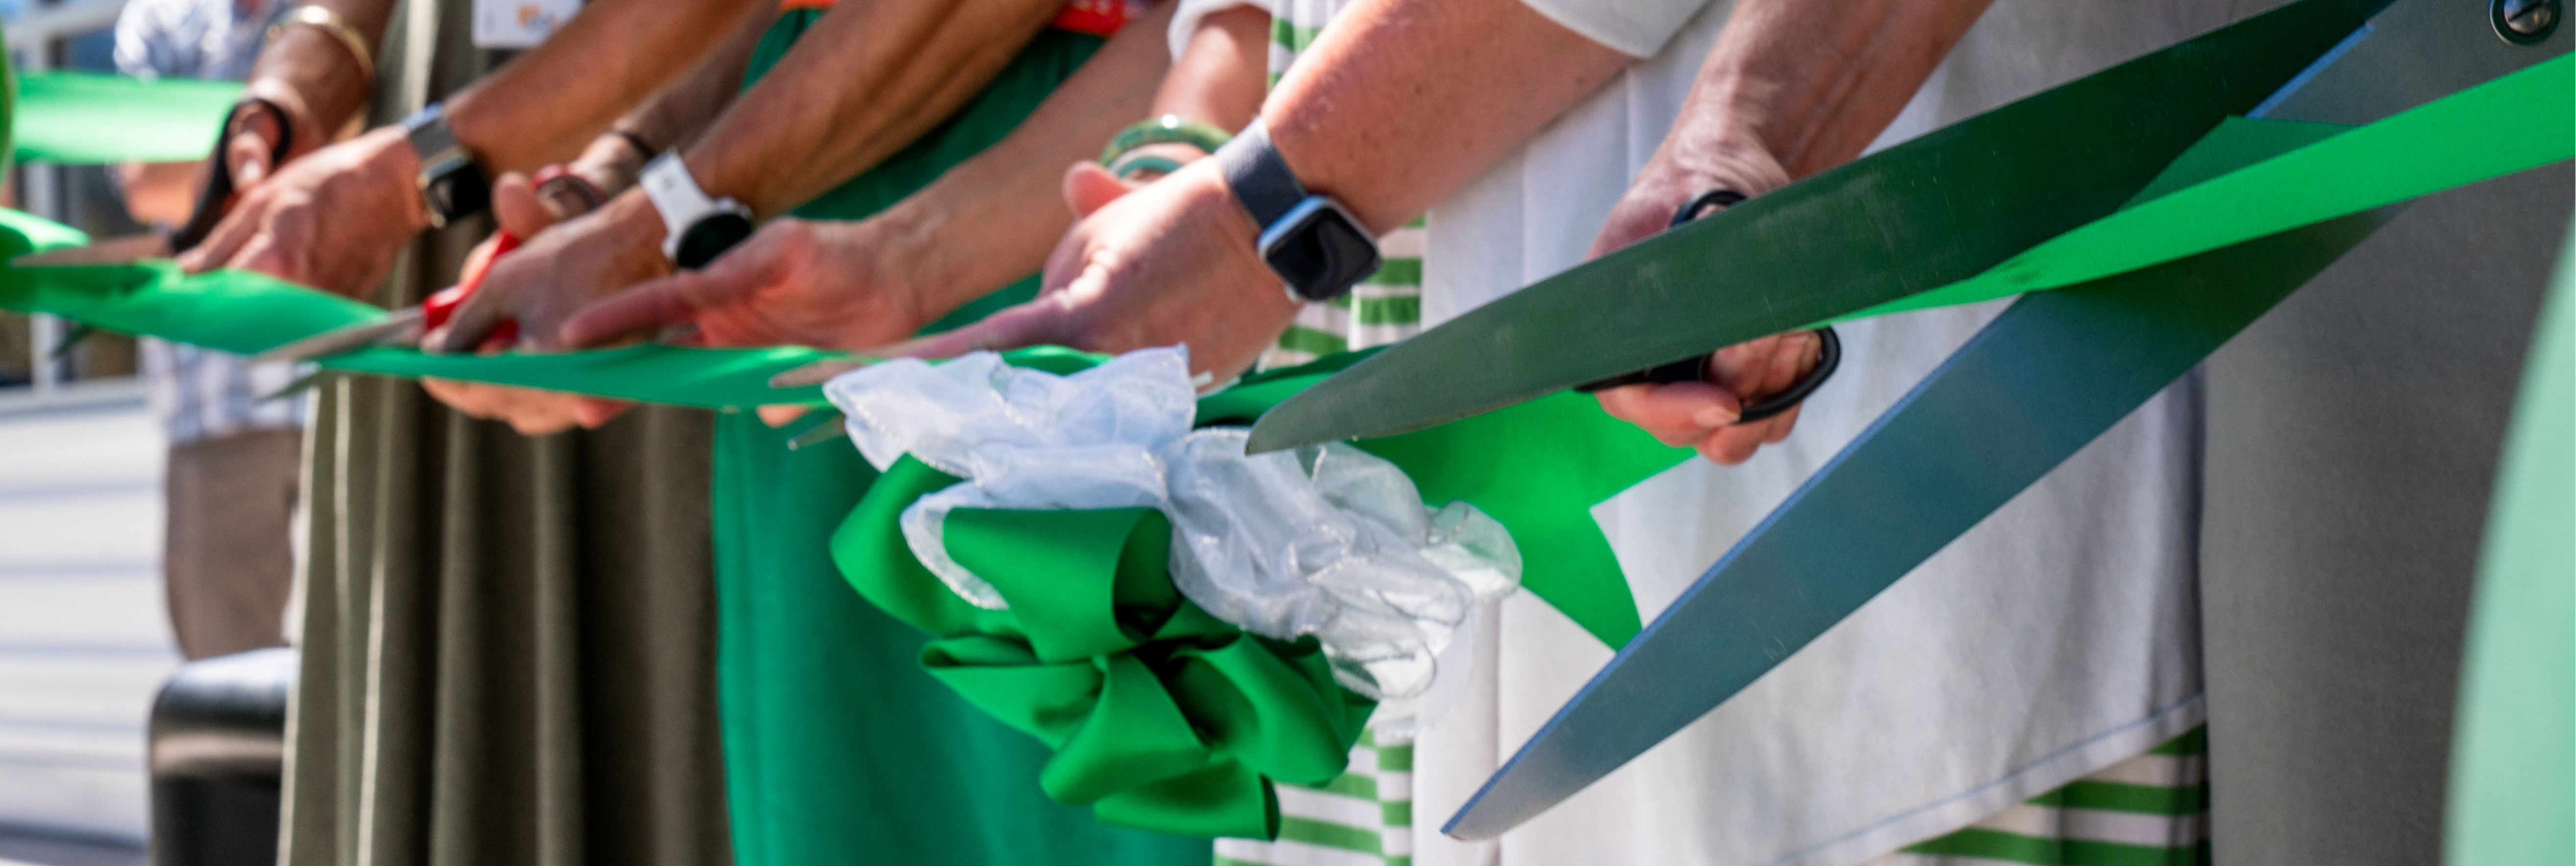 Hands holding scissors cutting green ribbon